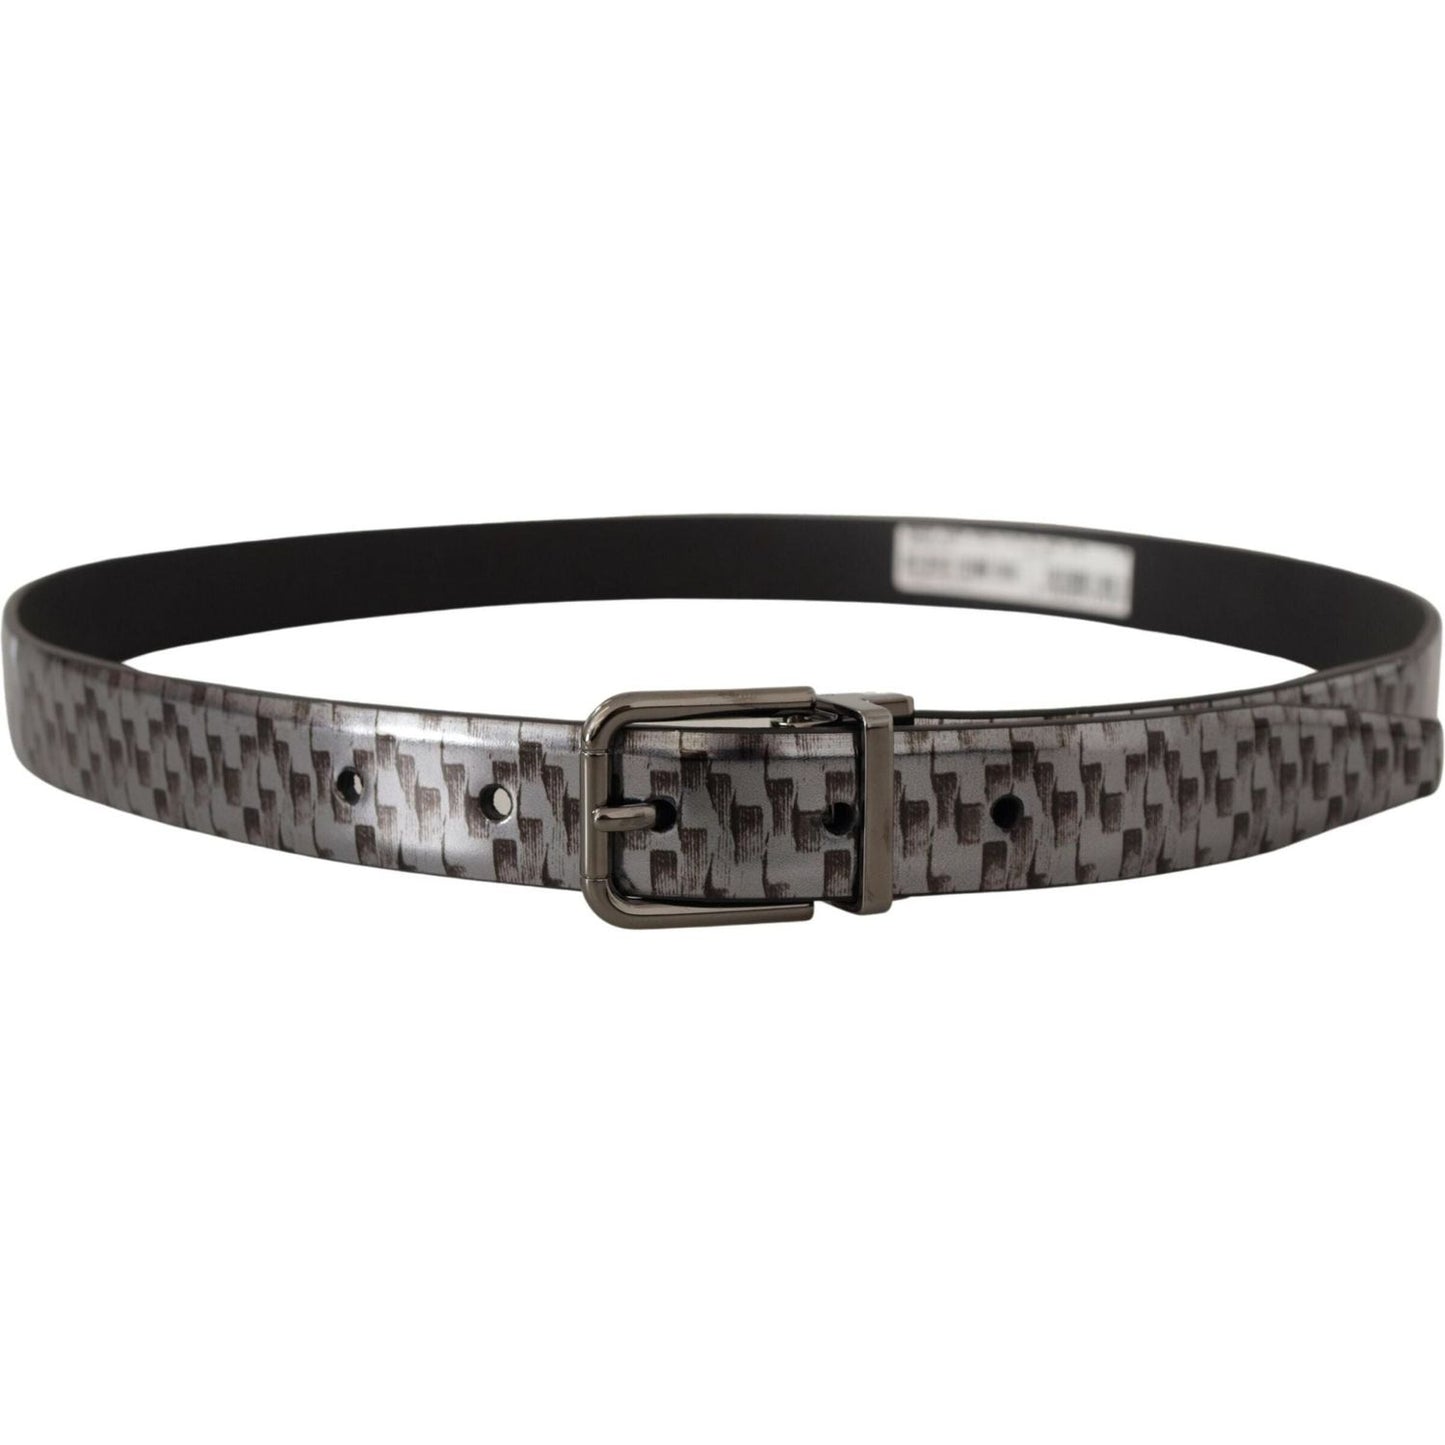 Dolce & Gabbana Sleek Italian Leather Belt in Sophisticated Gray gray-herringbone-leather-gray-3d-metal-buckle-belt IMG_7642-scaled-854d4050-c06.jpg